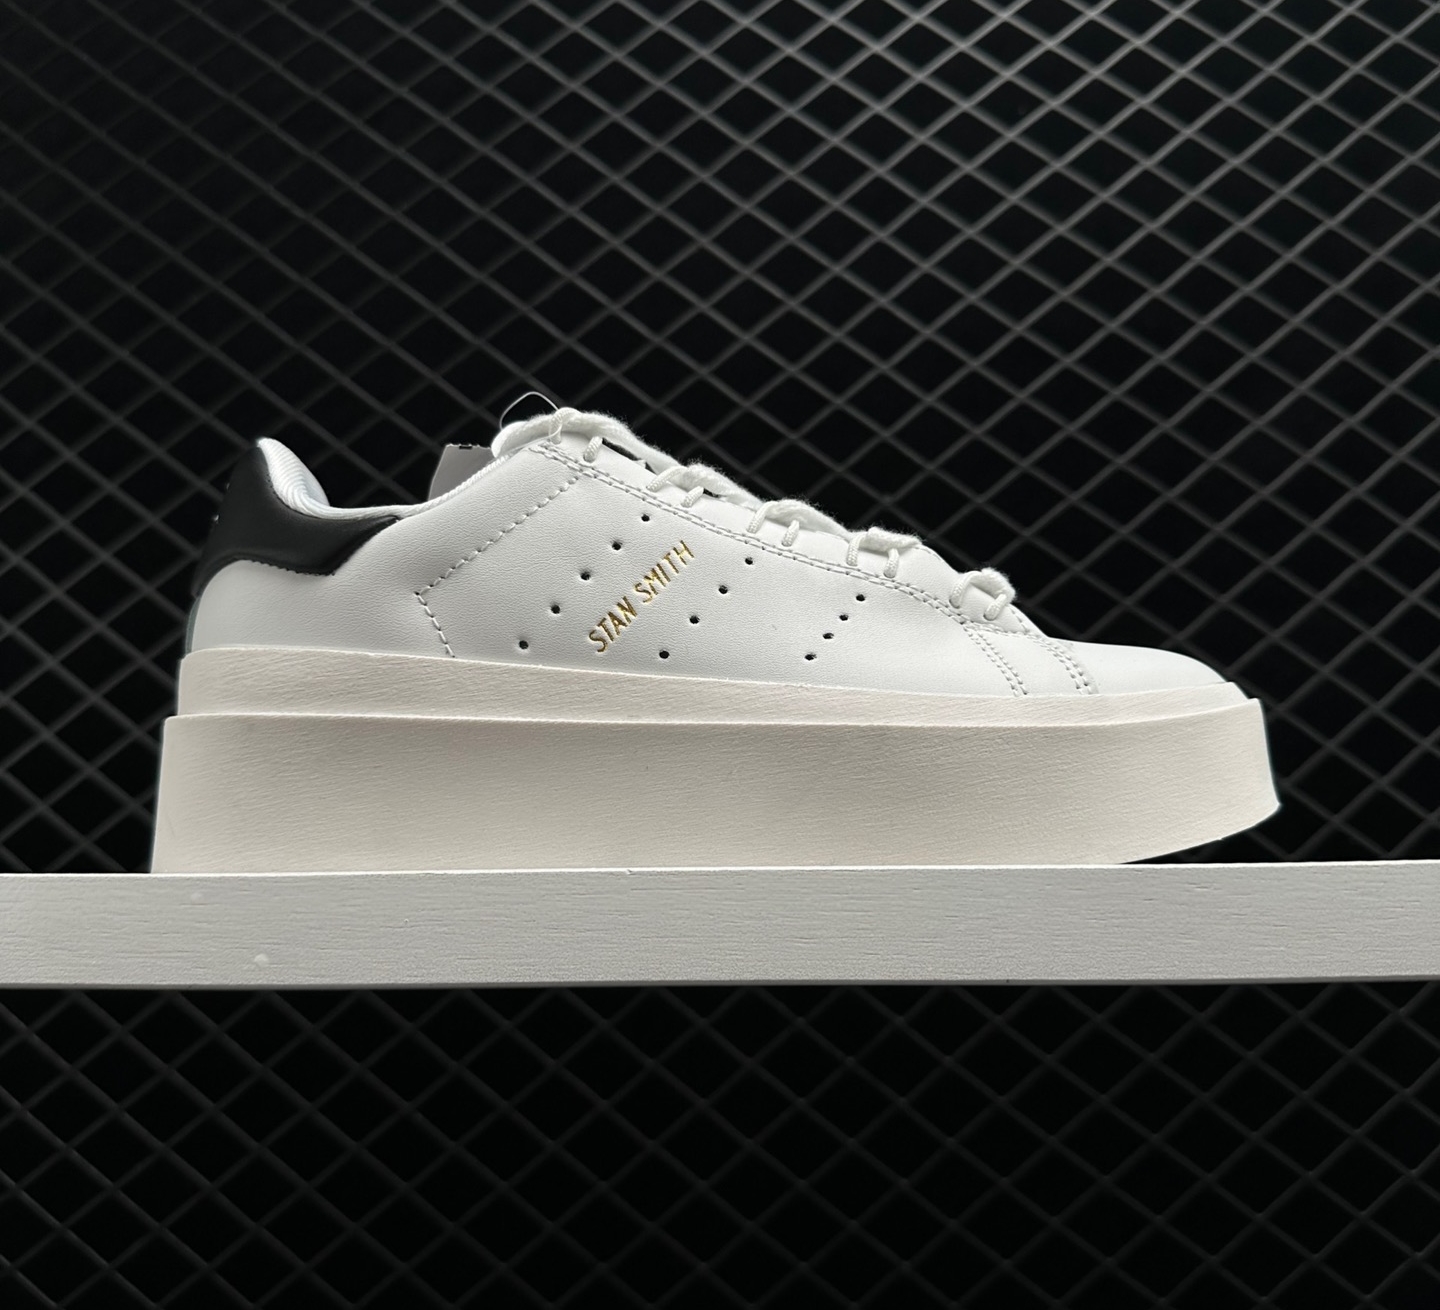 Adidas Stan Smith Bonega White Black - Classic Sneaker Must-Have